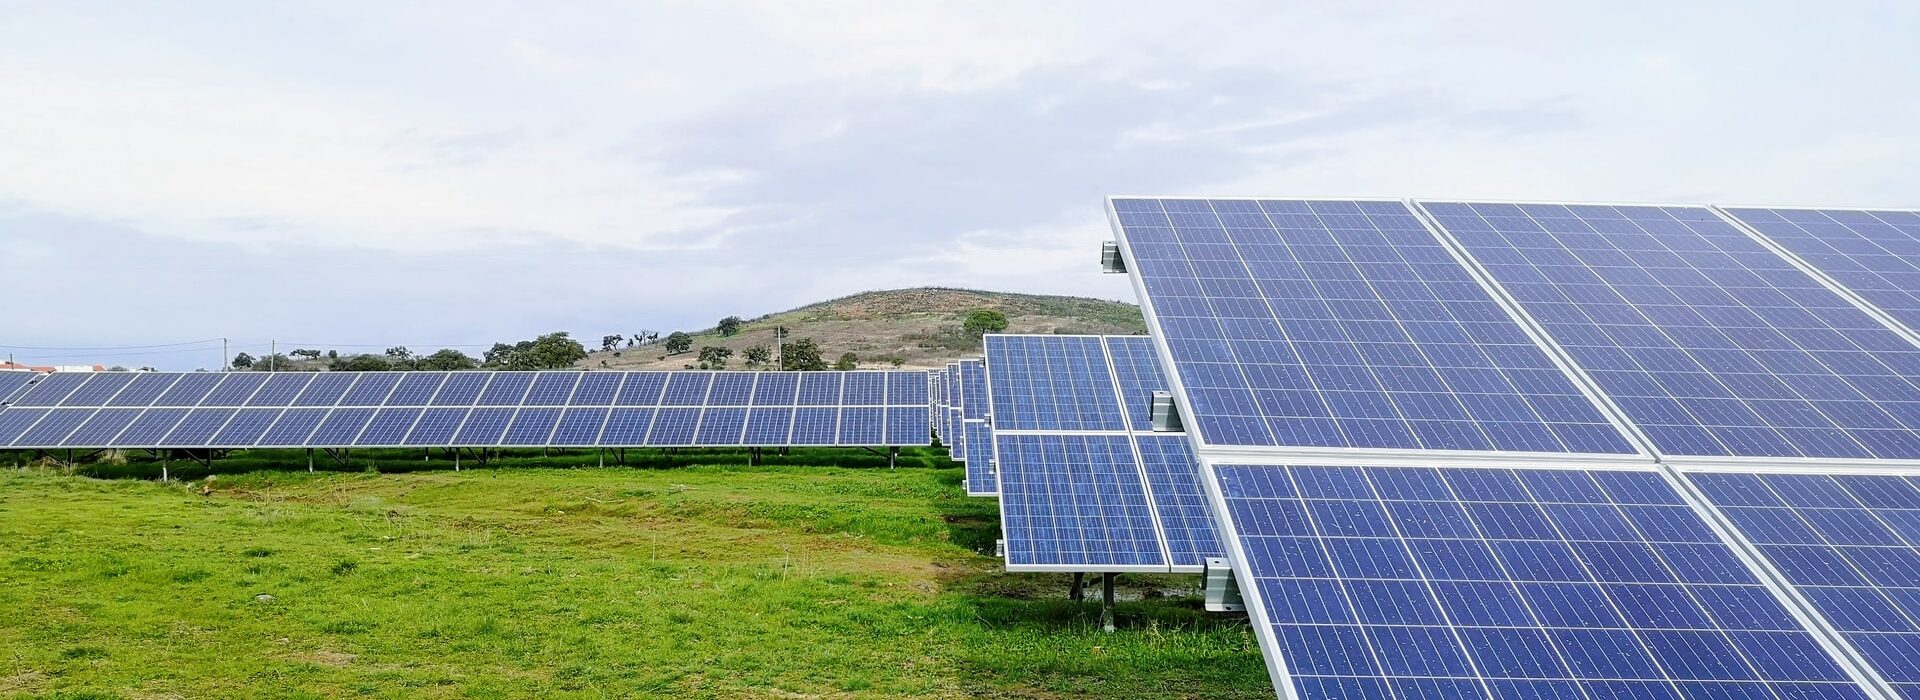 meio ambiente energia solar - Saiba a importância da energia solar para o meio ambiente e para o seu bolso